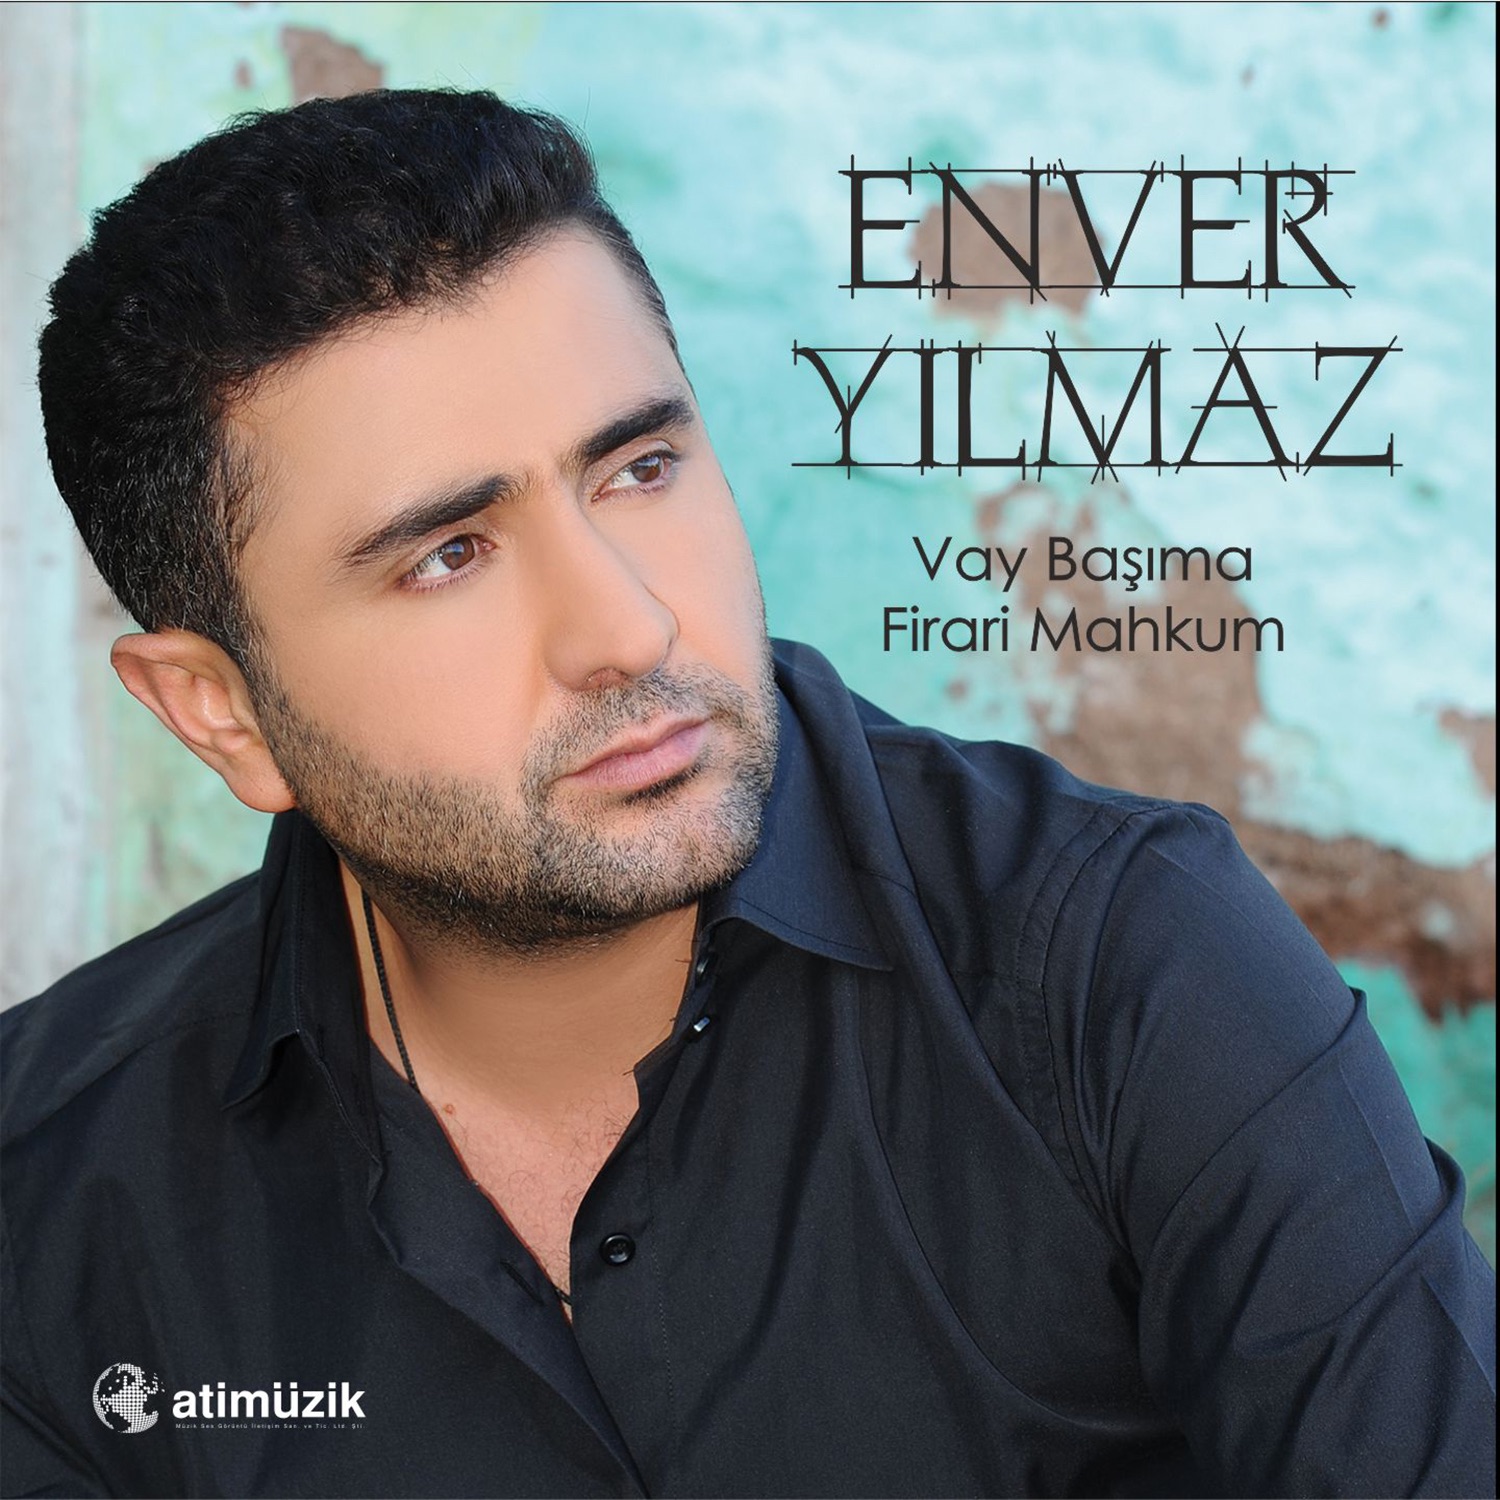 „Vay Başıma / Firari Mahkum“ von Enver Yılmaz in iTunes